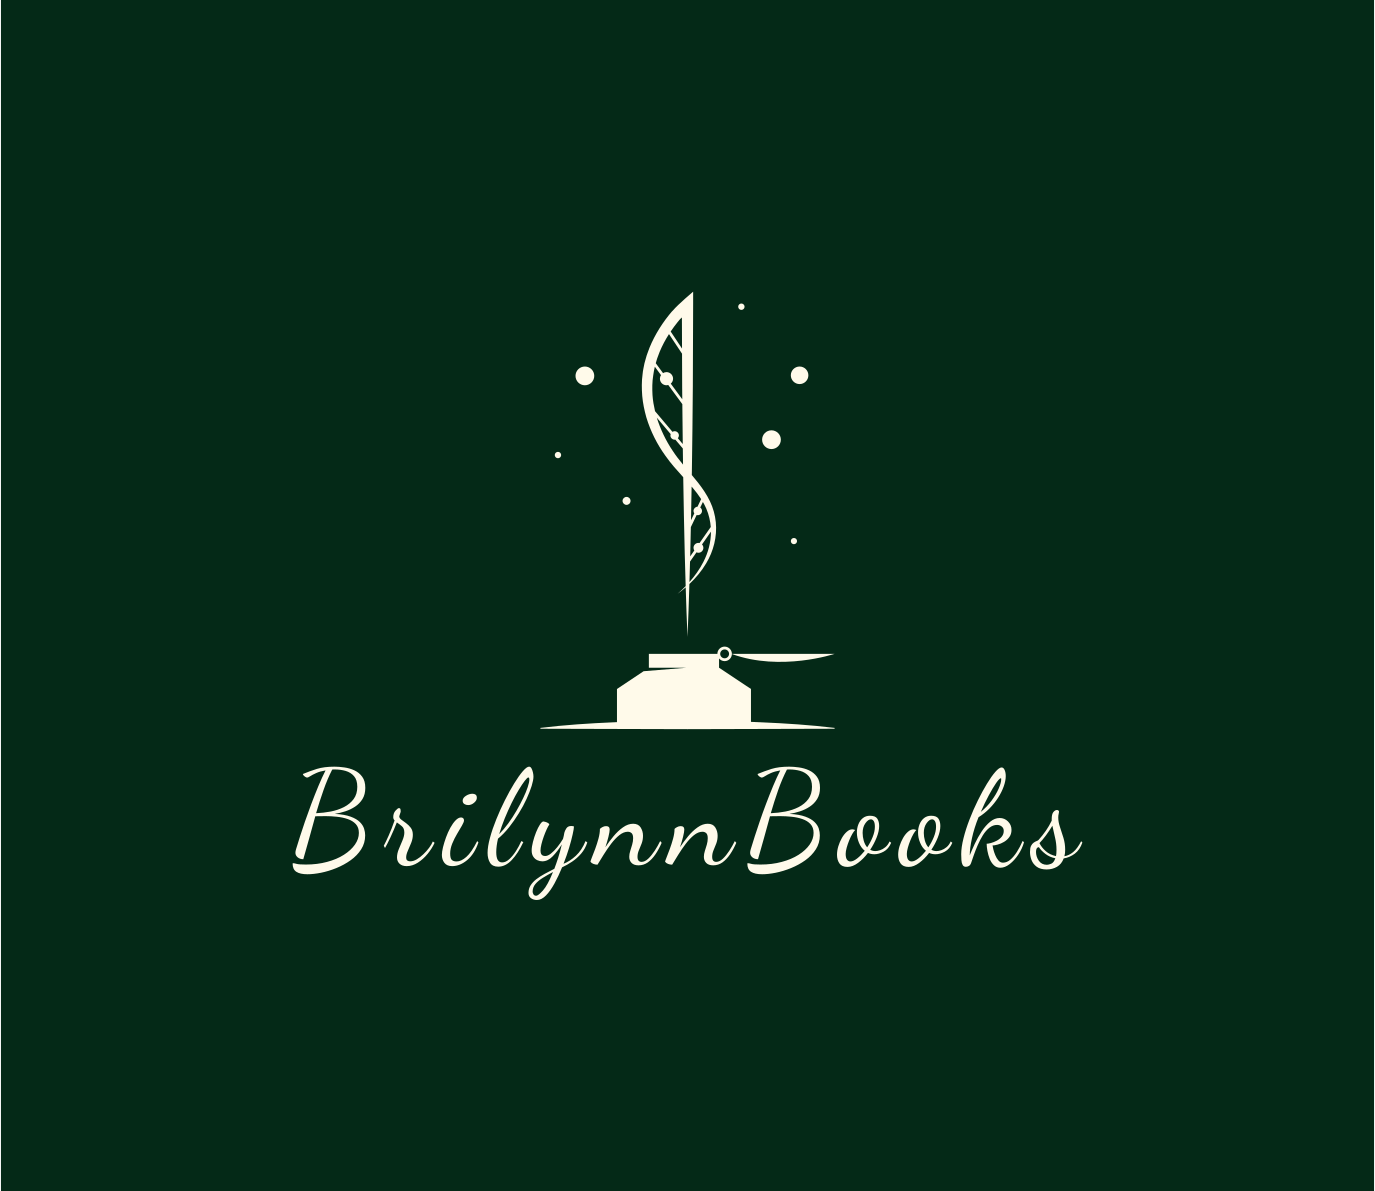 Brilynn Books